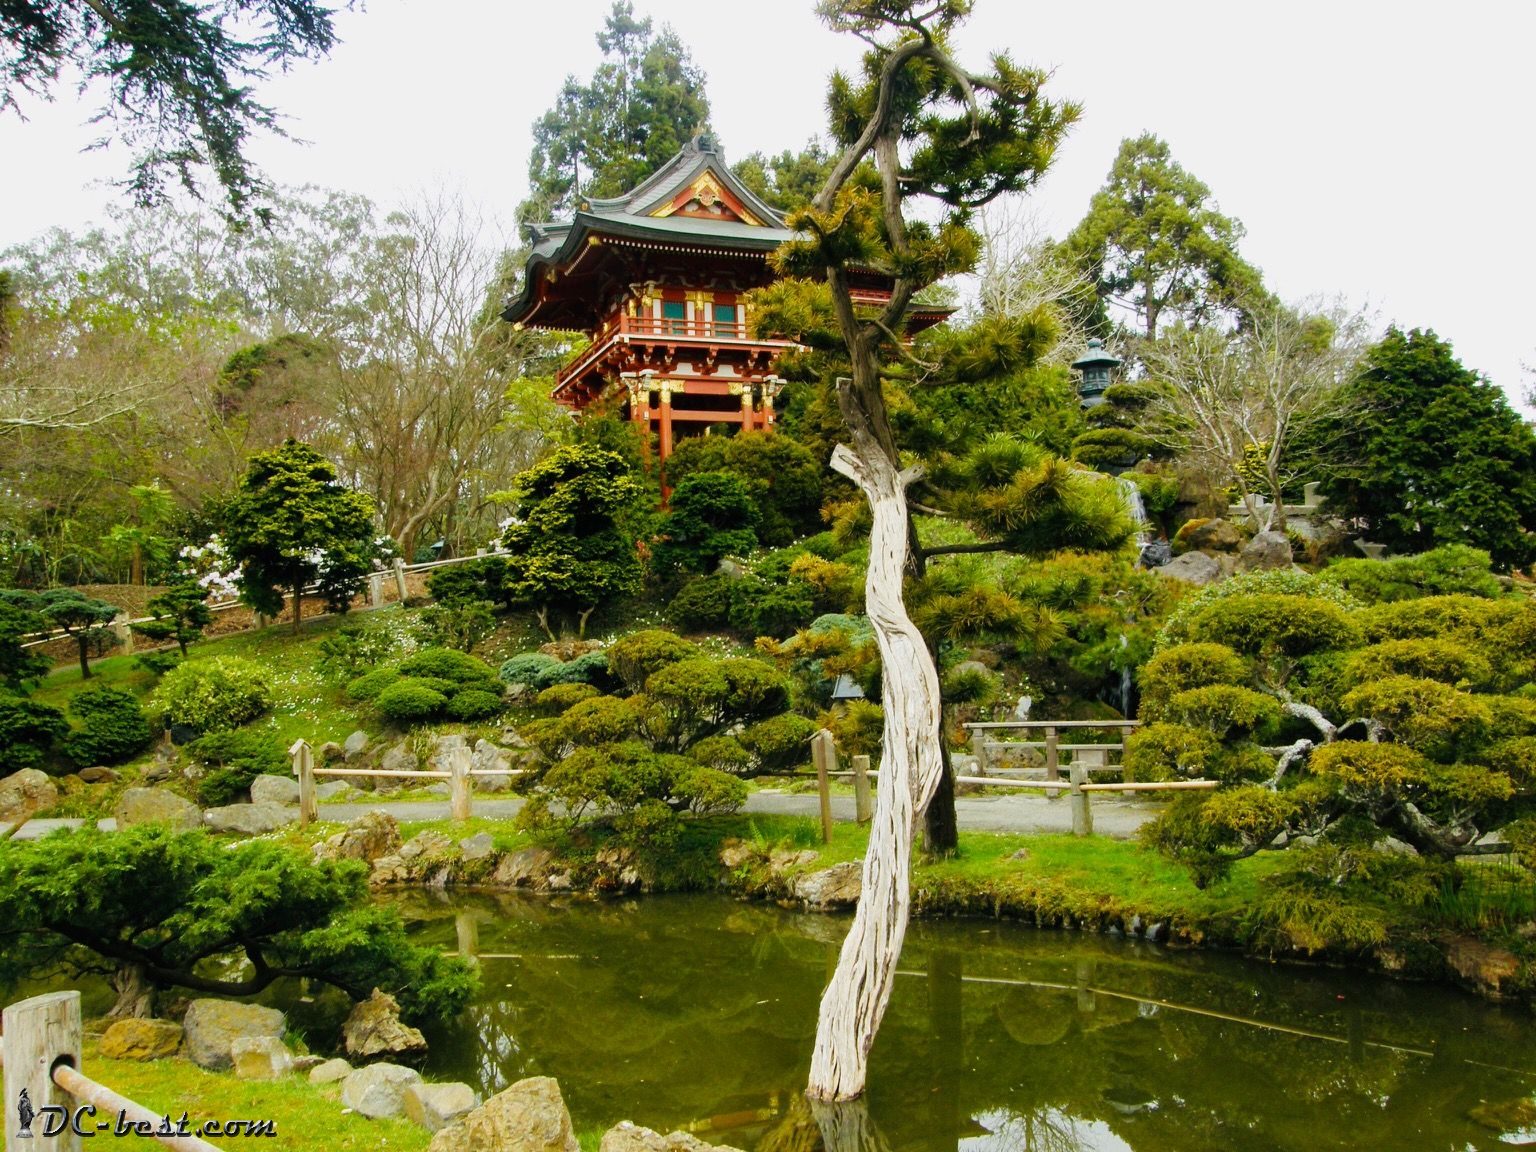 Japanese Tea Garden in Golden Gate Park. Японский чайный сад в парке Золотые Ворота.